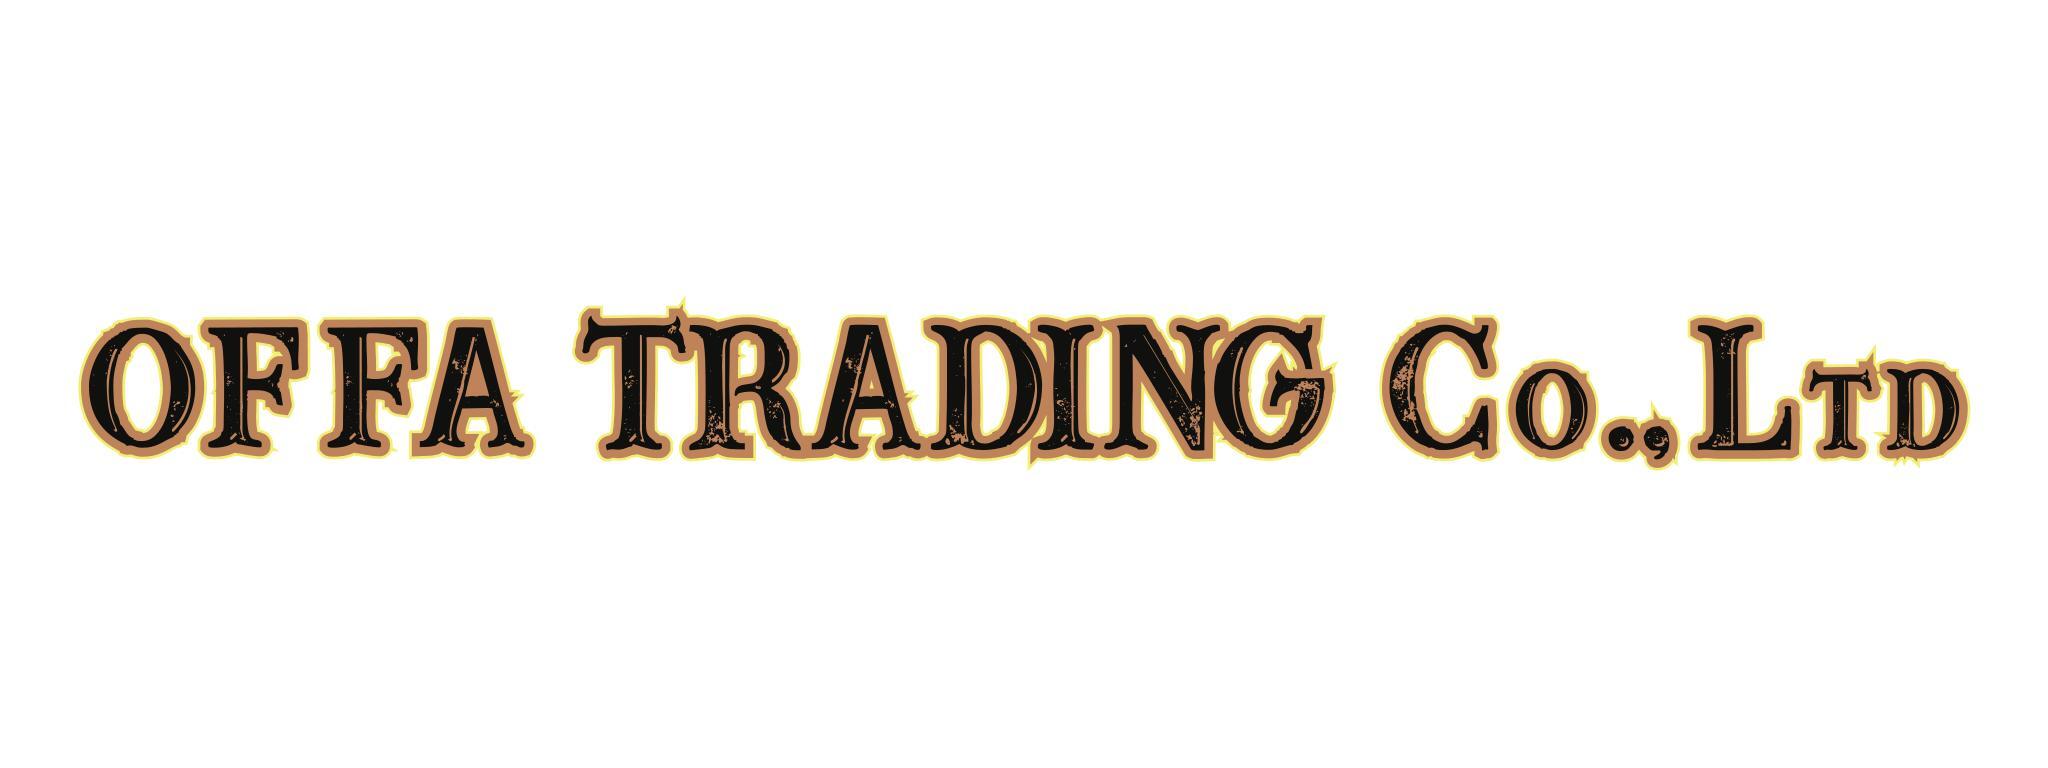 OFFA Trading Co., Ltd. | 豆沙貿易有限公司